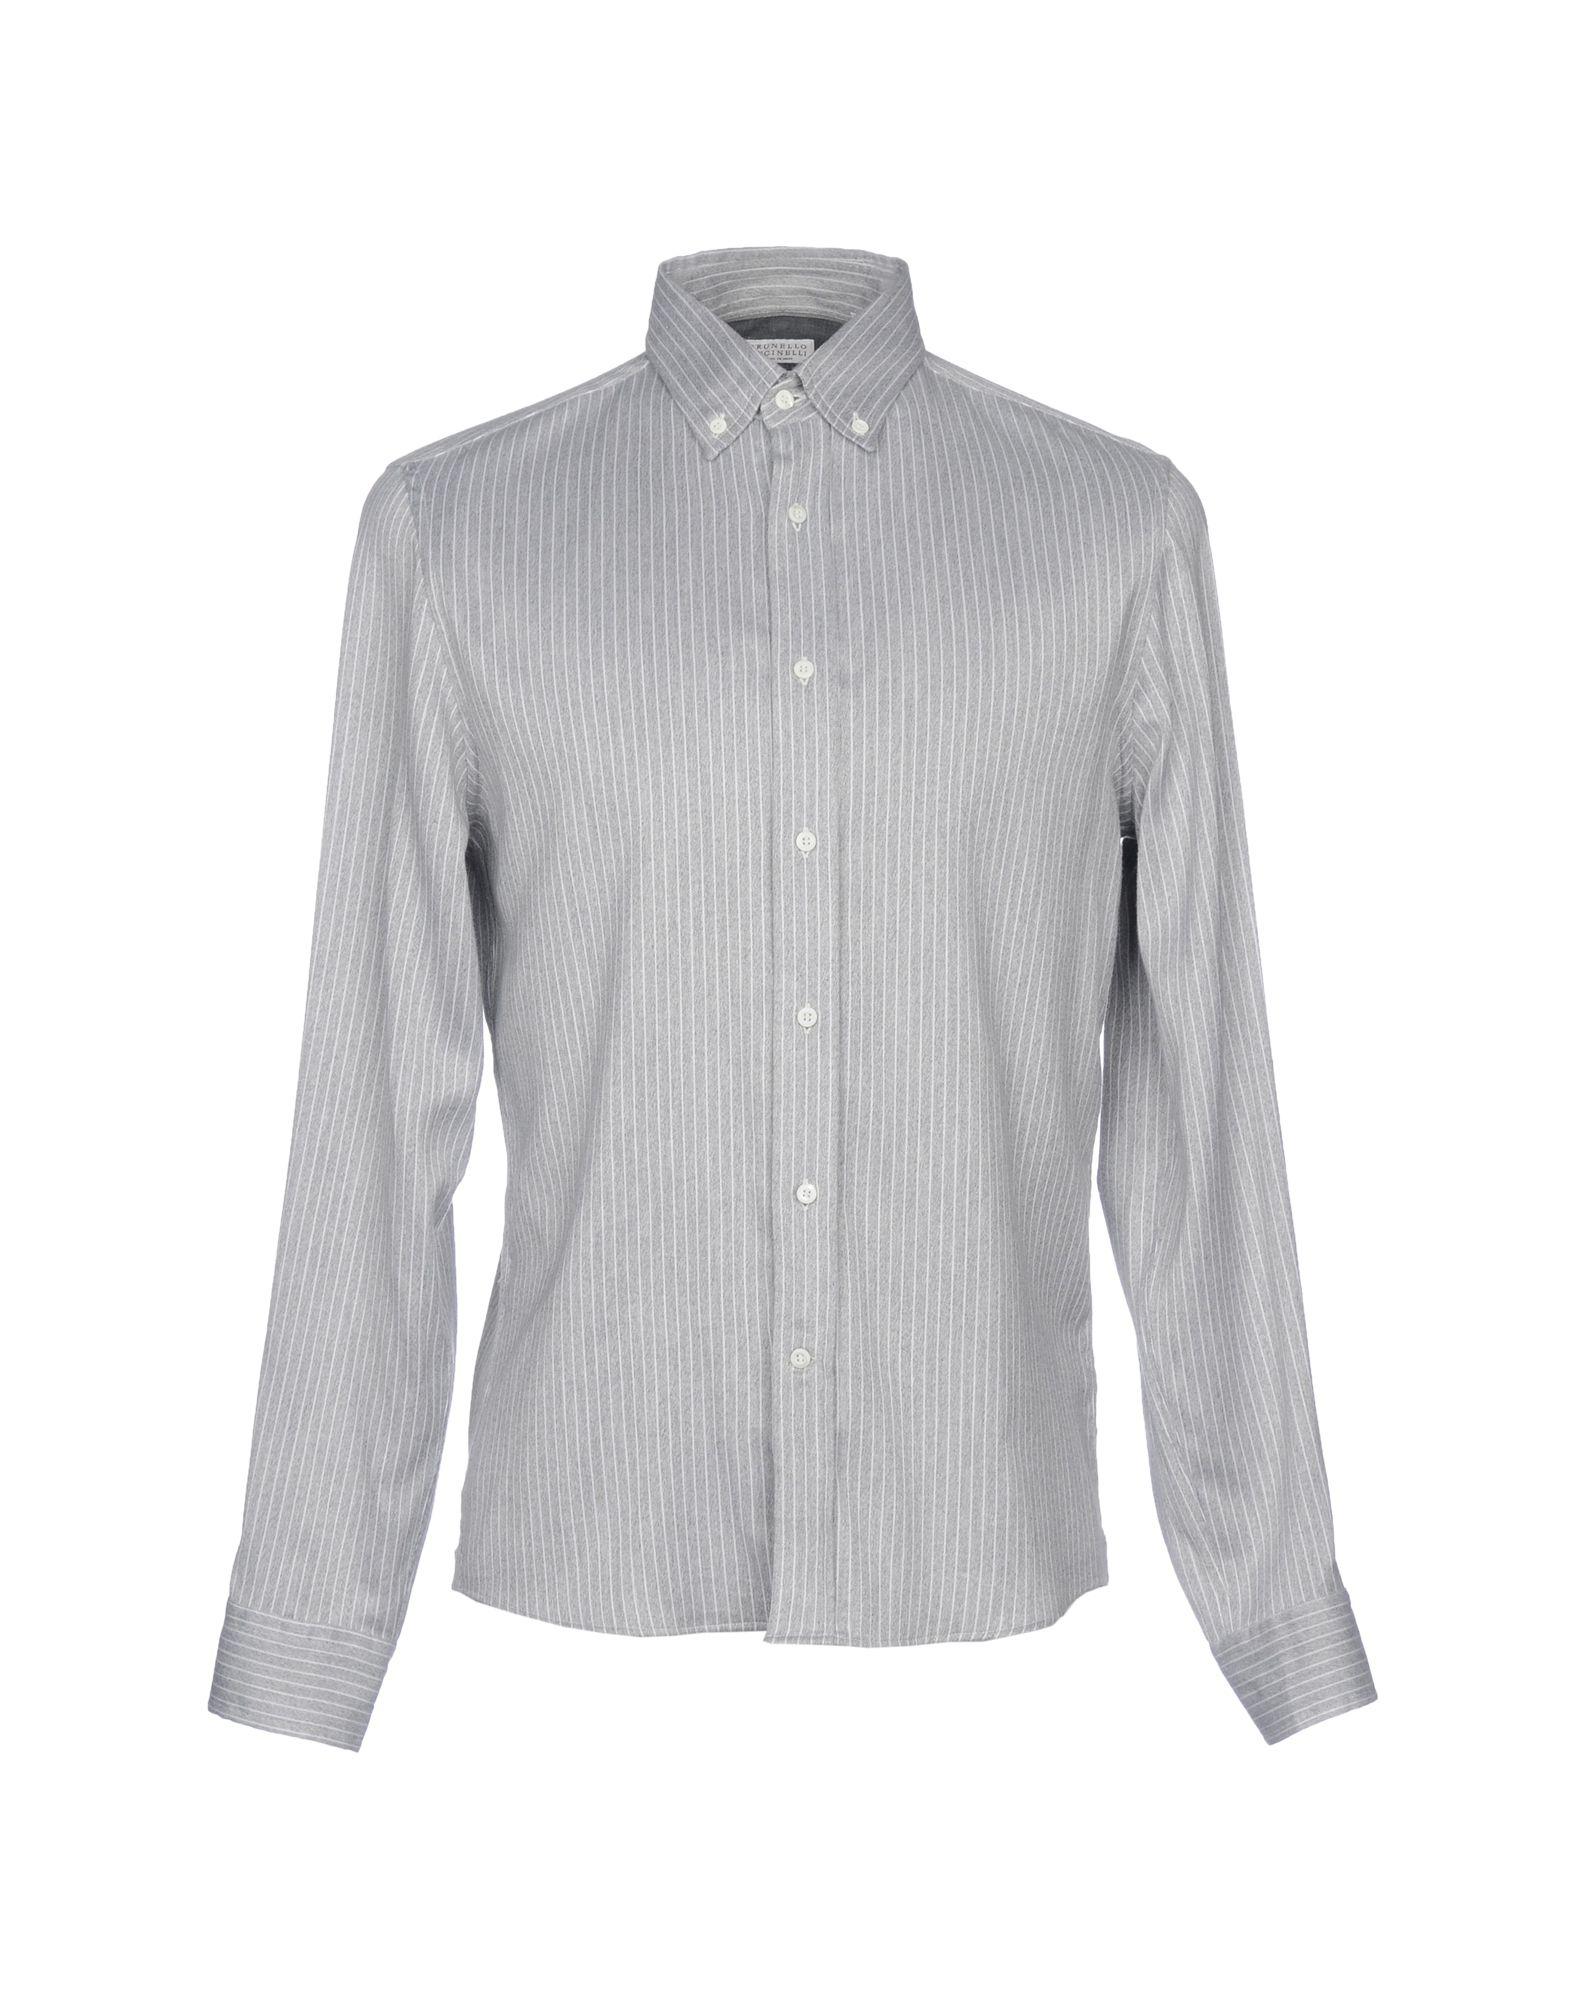 Brunello Cucinelli Cotton Shirt in Grey (Gray) for Men - Lyst